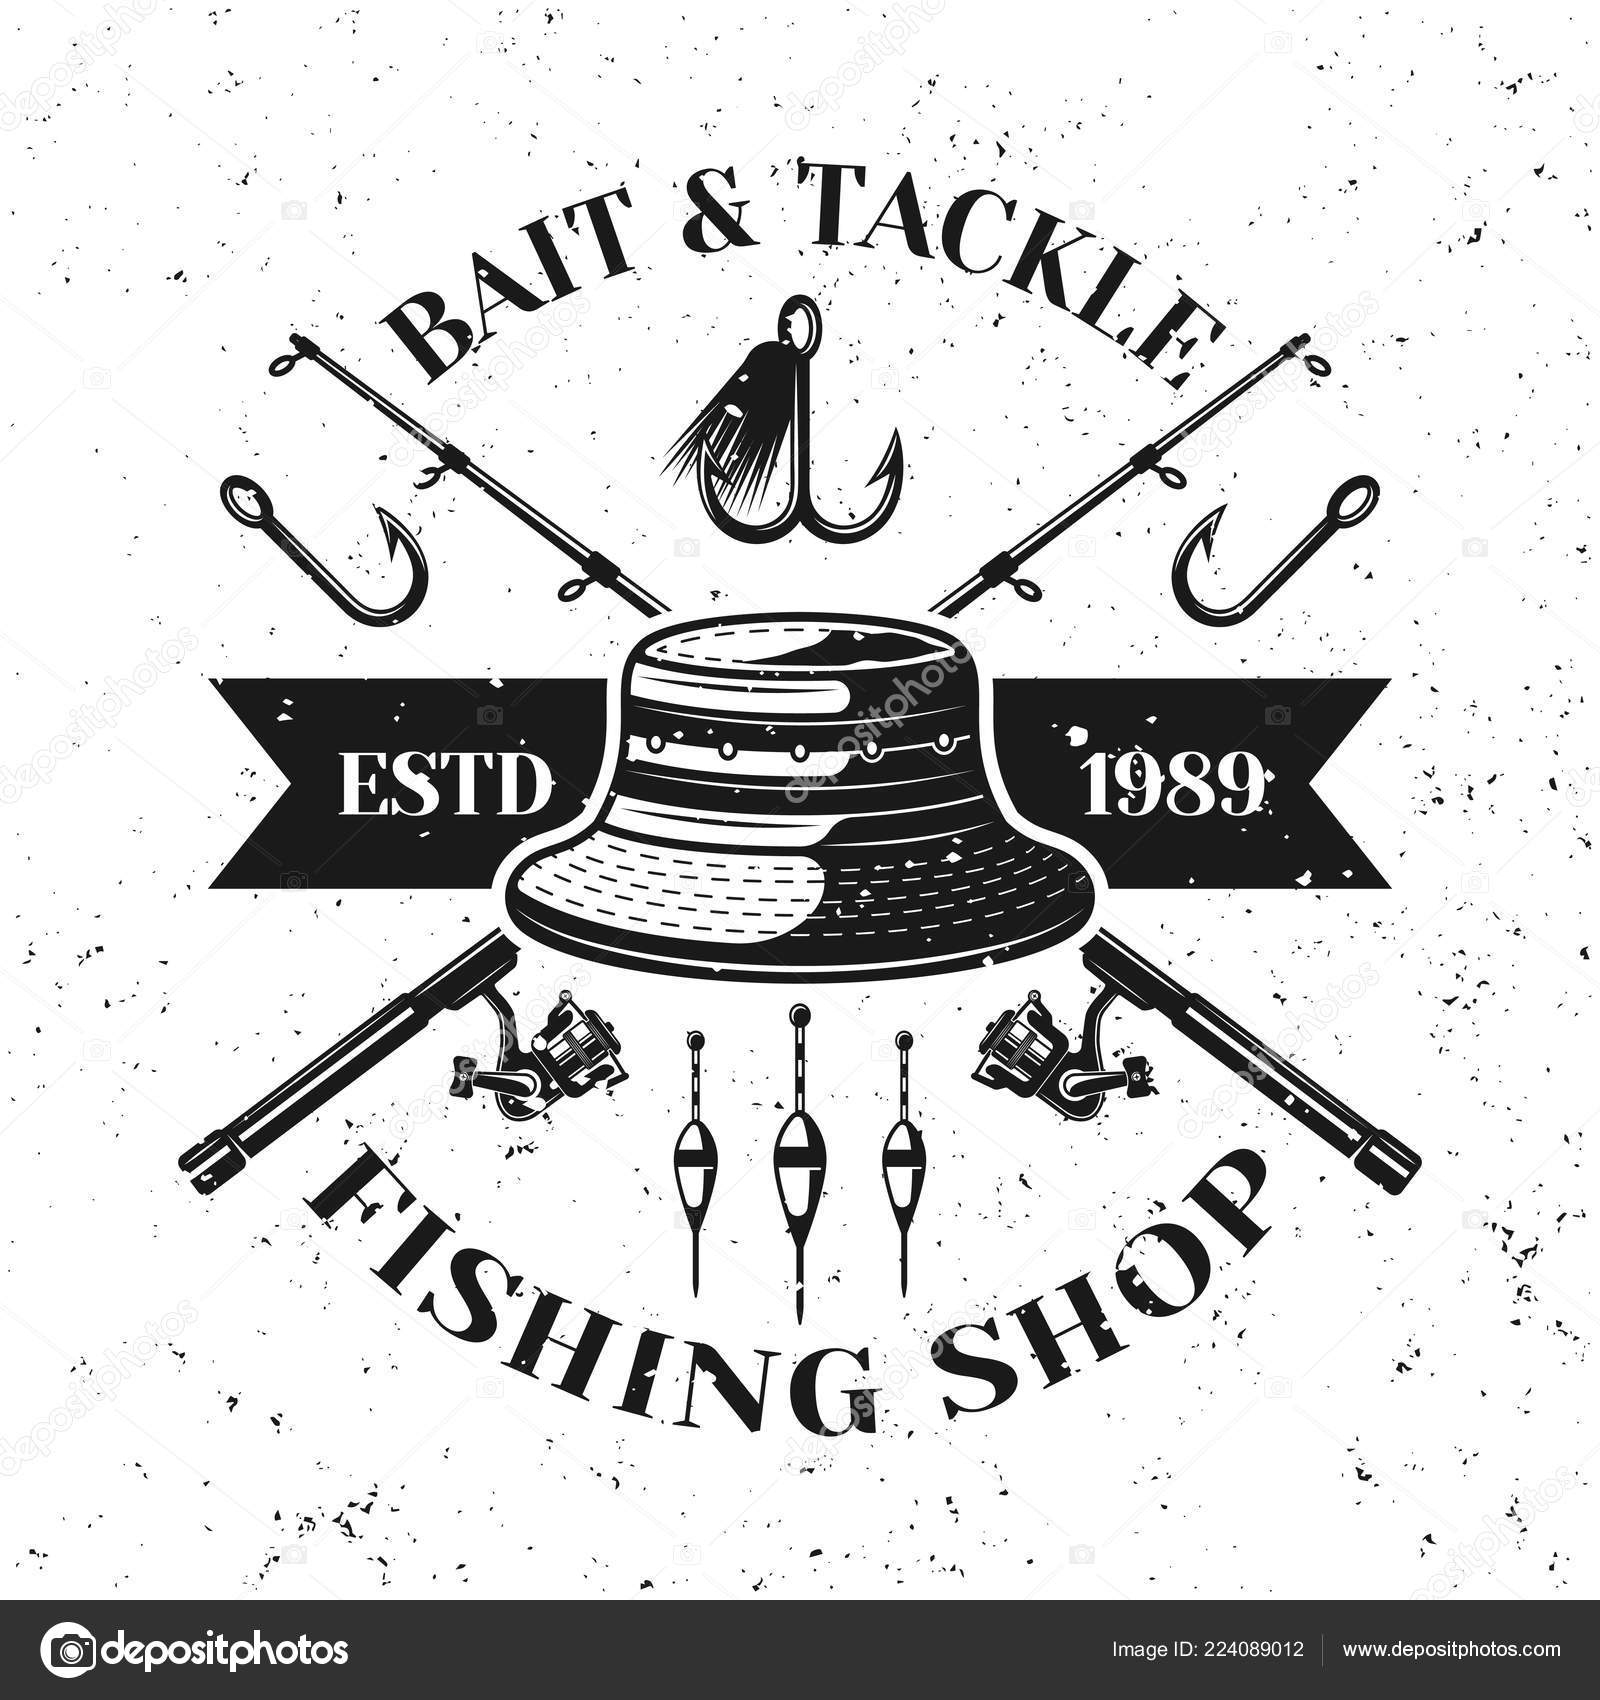 https://st4.depositphotos.com/14177824/22408/v/1600/depositphotos_224089012-stock-illustration-fishing-shop-vector-emblem-label.jpg